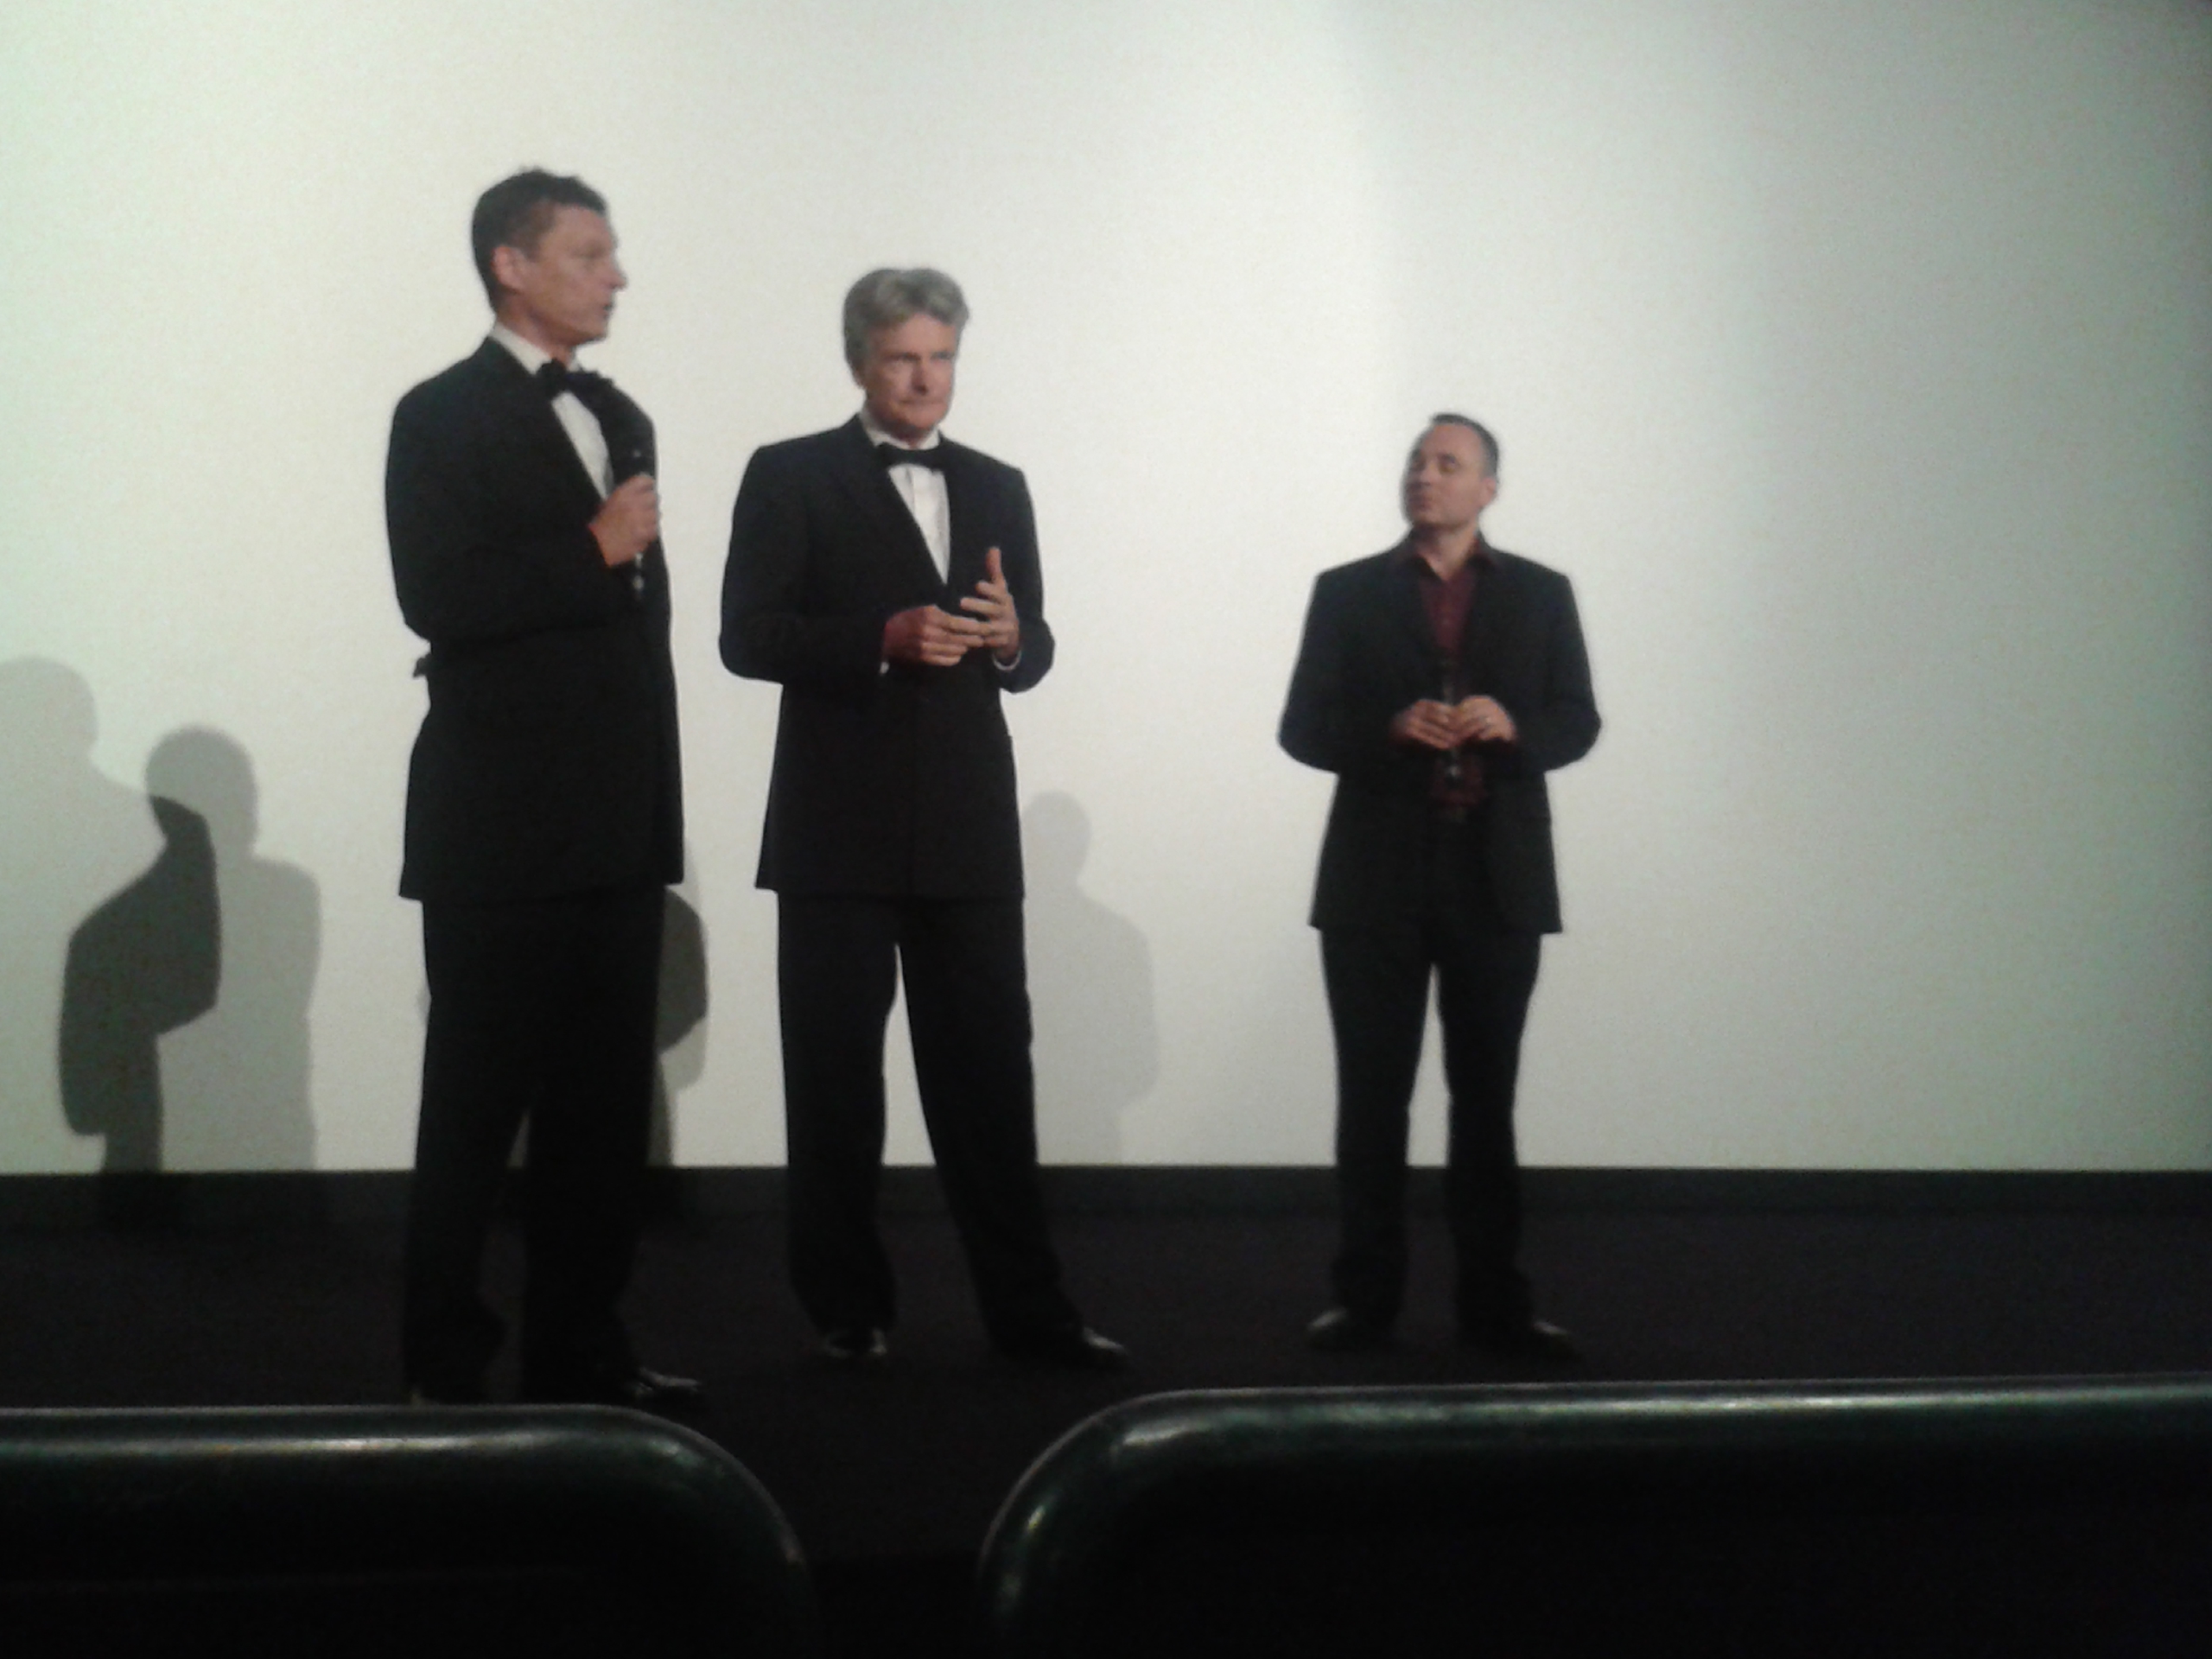 Cannes Film Festival 2014 Screening Stuart Cooper with Peter Becker